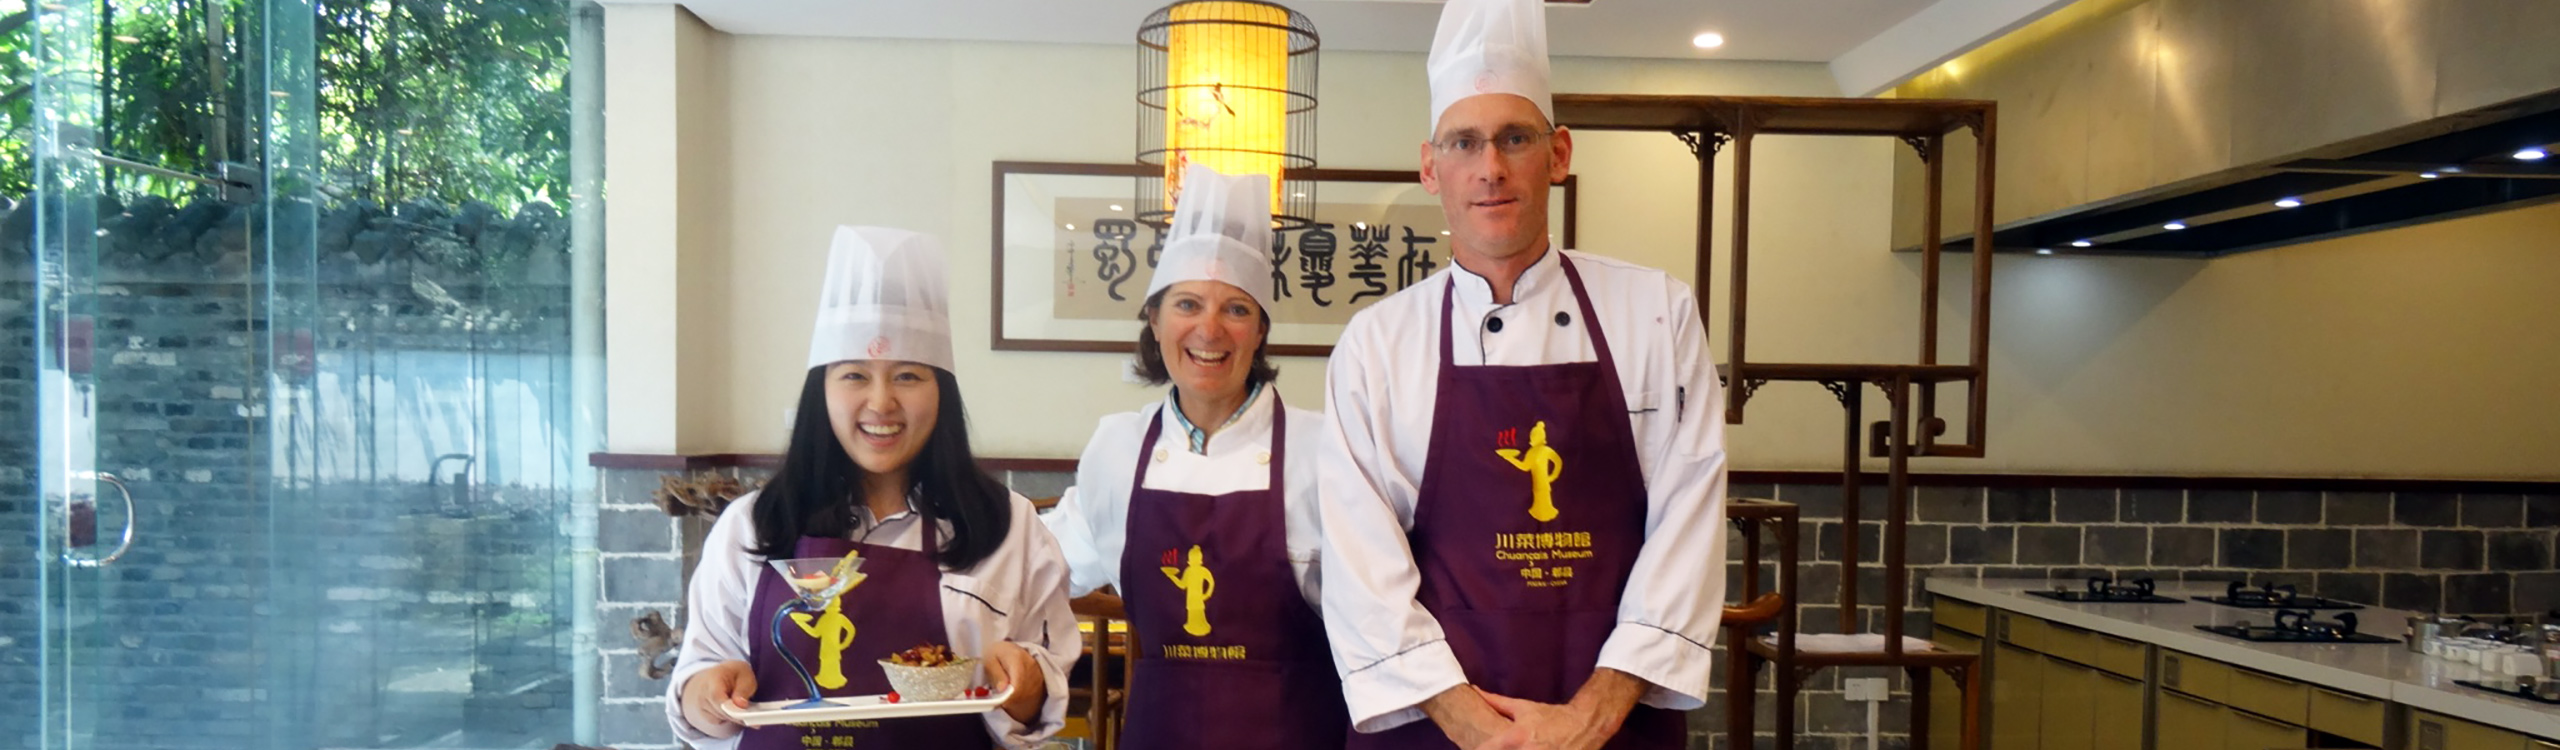 China Foodie Tour